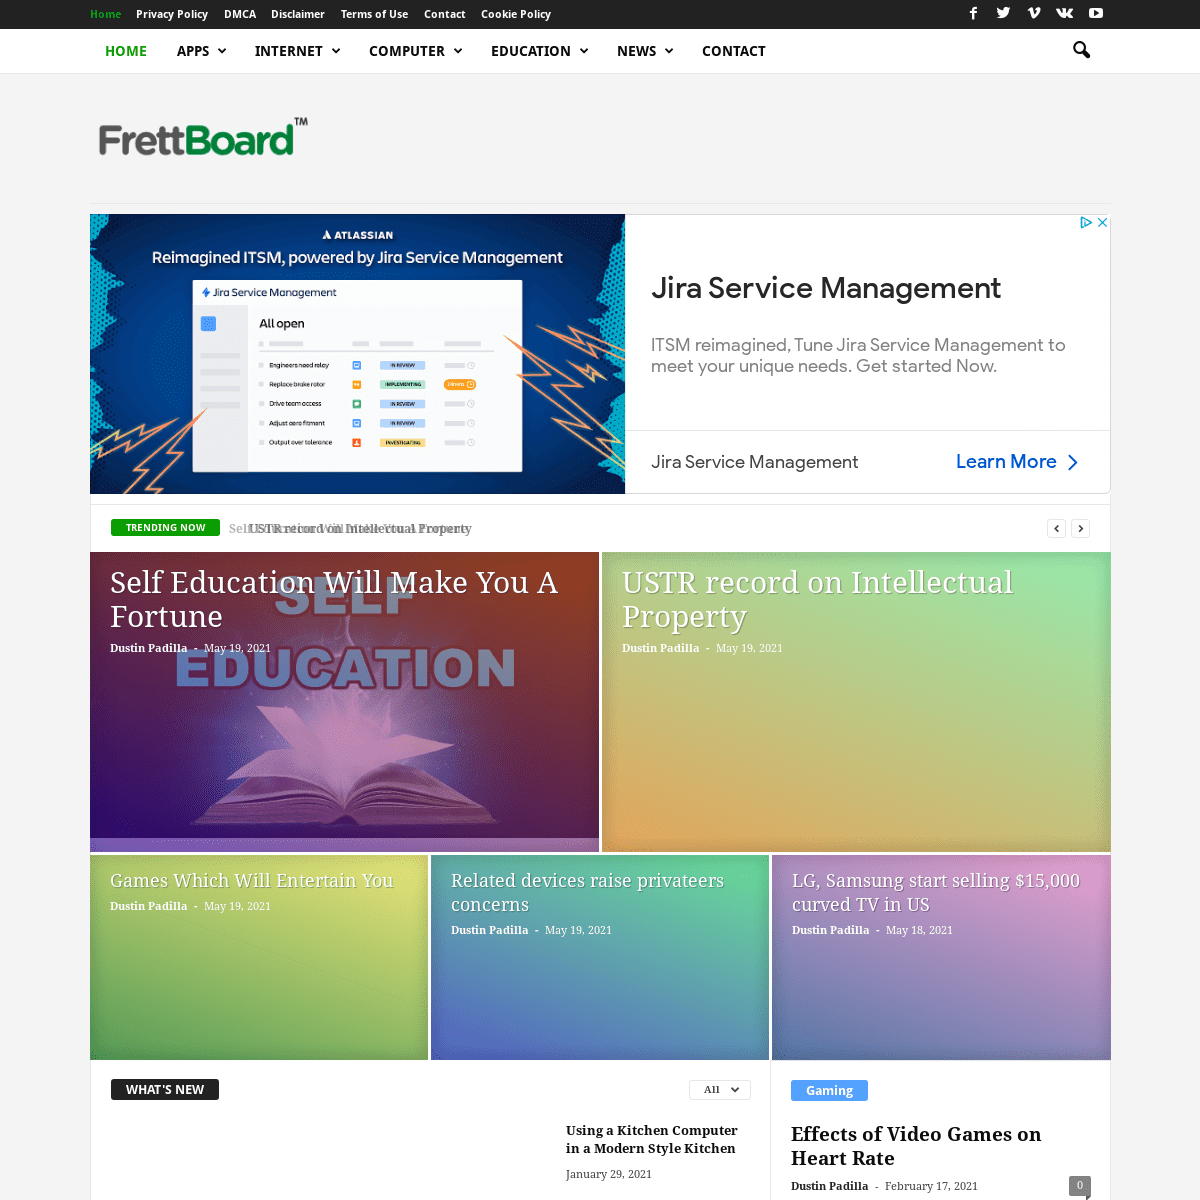 A complete backup of https://frettboard.com